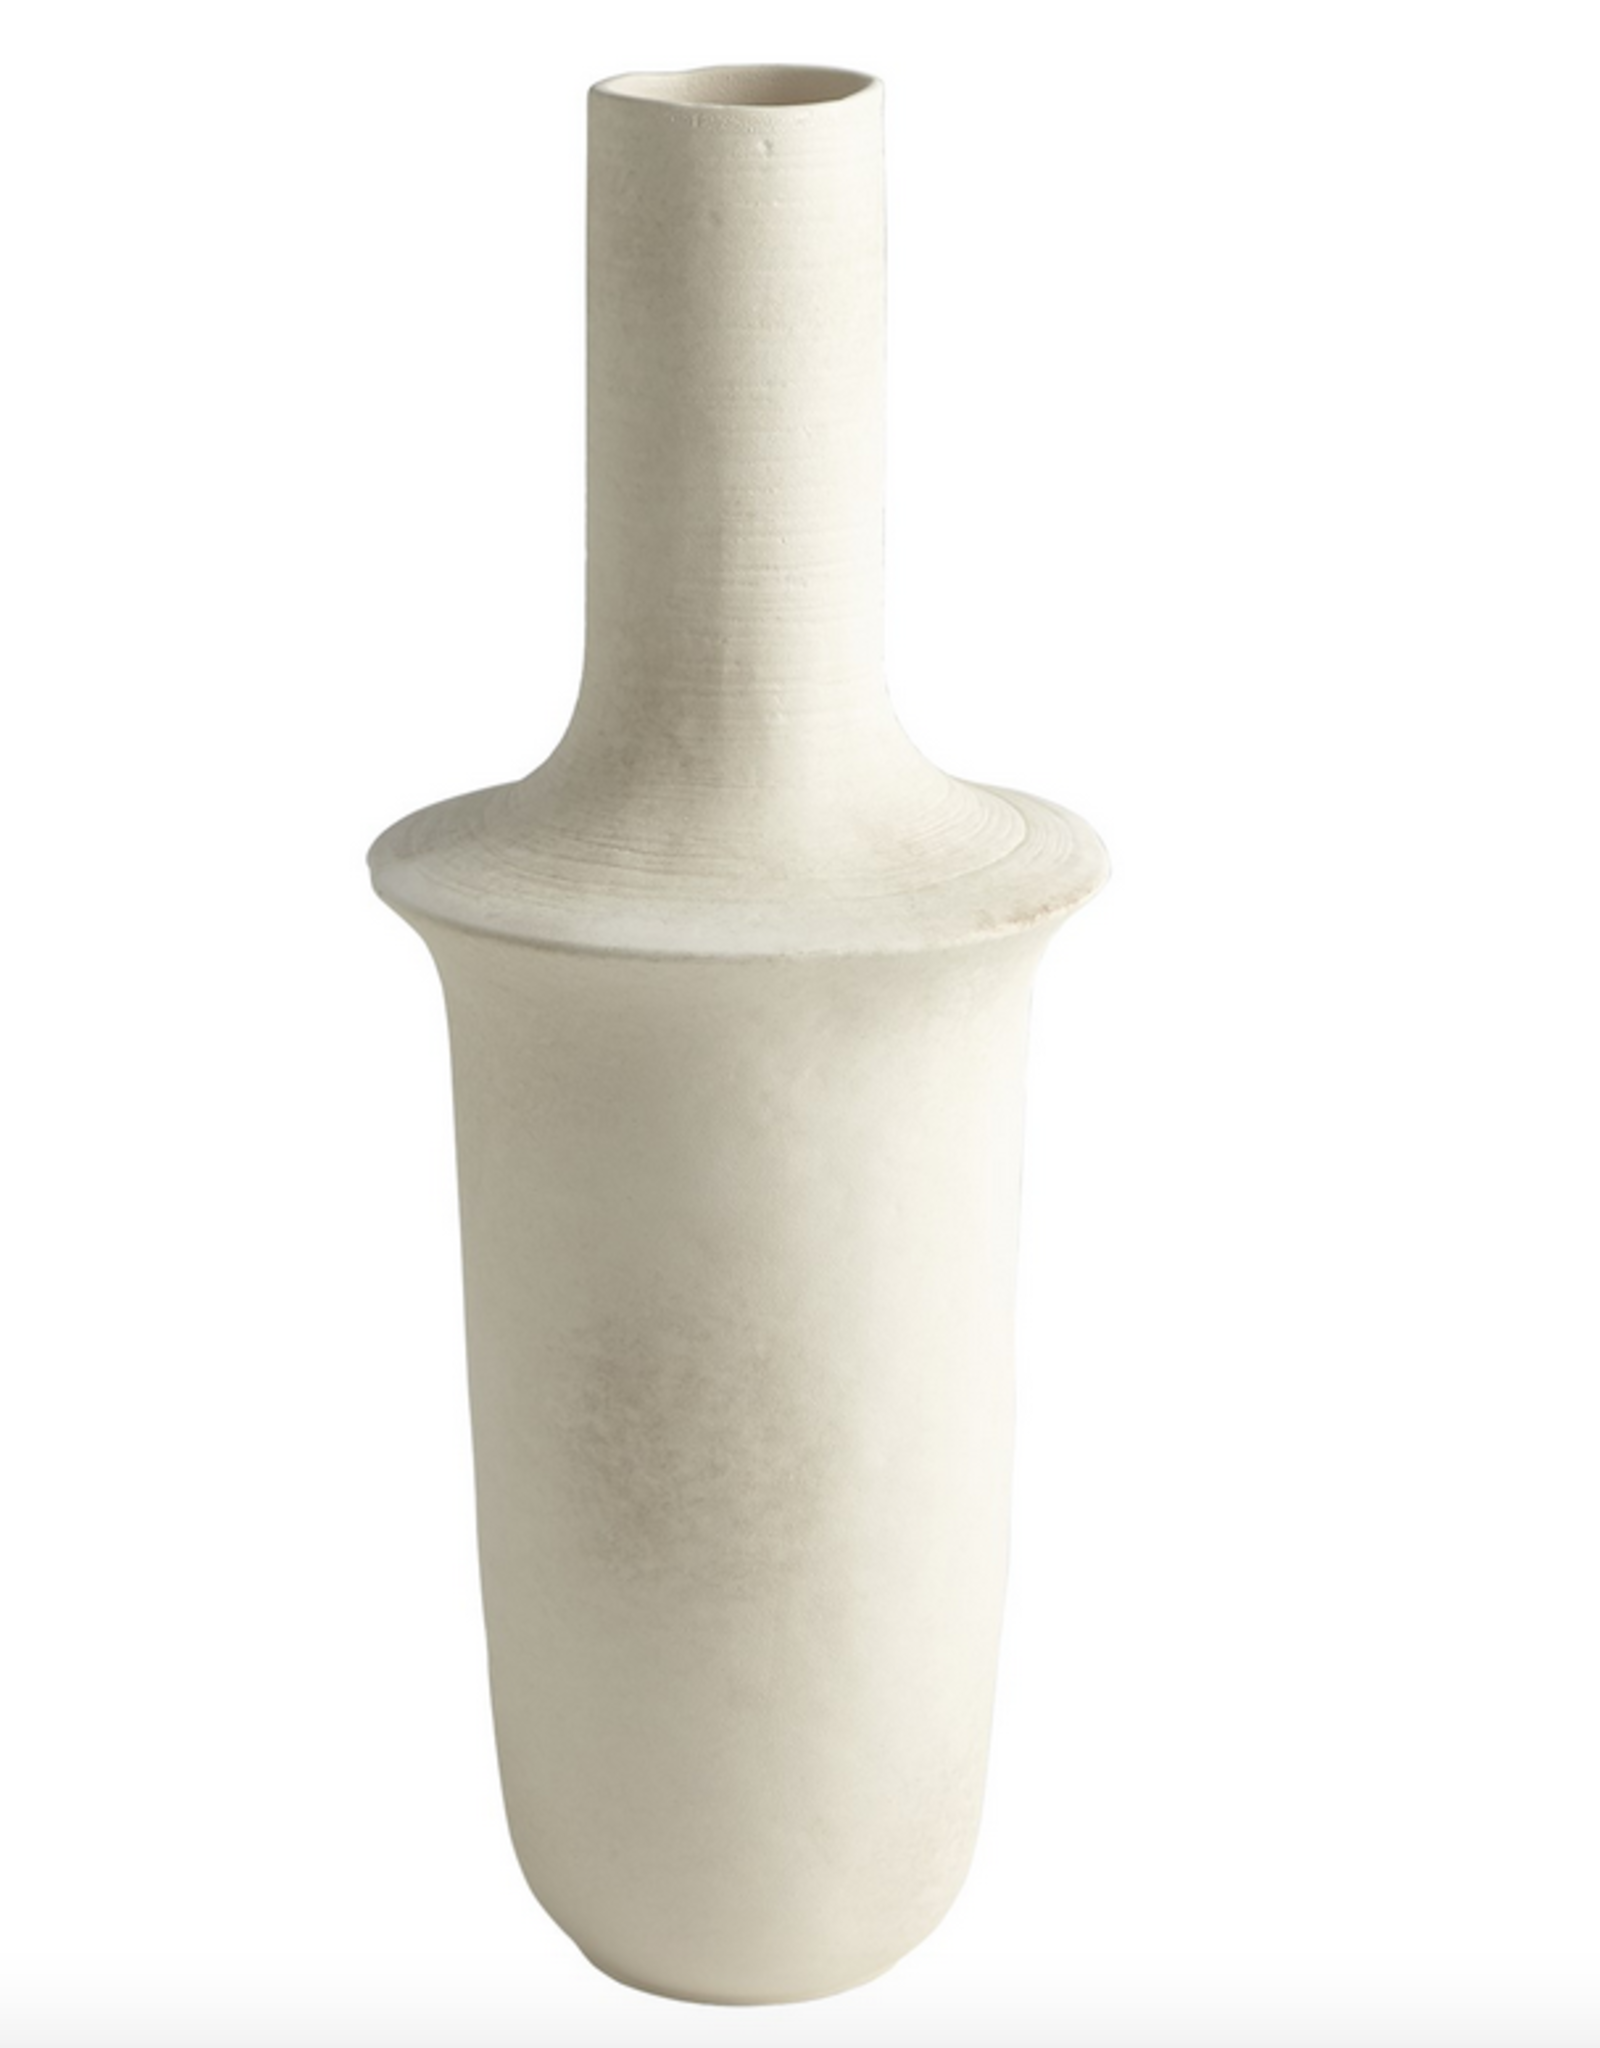 Tall Fladis Vase-Matte Cream Marble  H 20"  D 7.5"